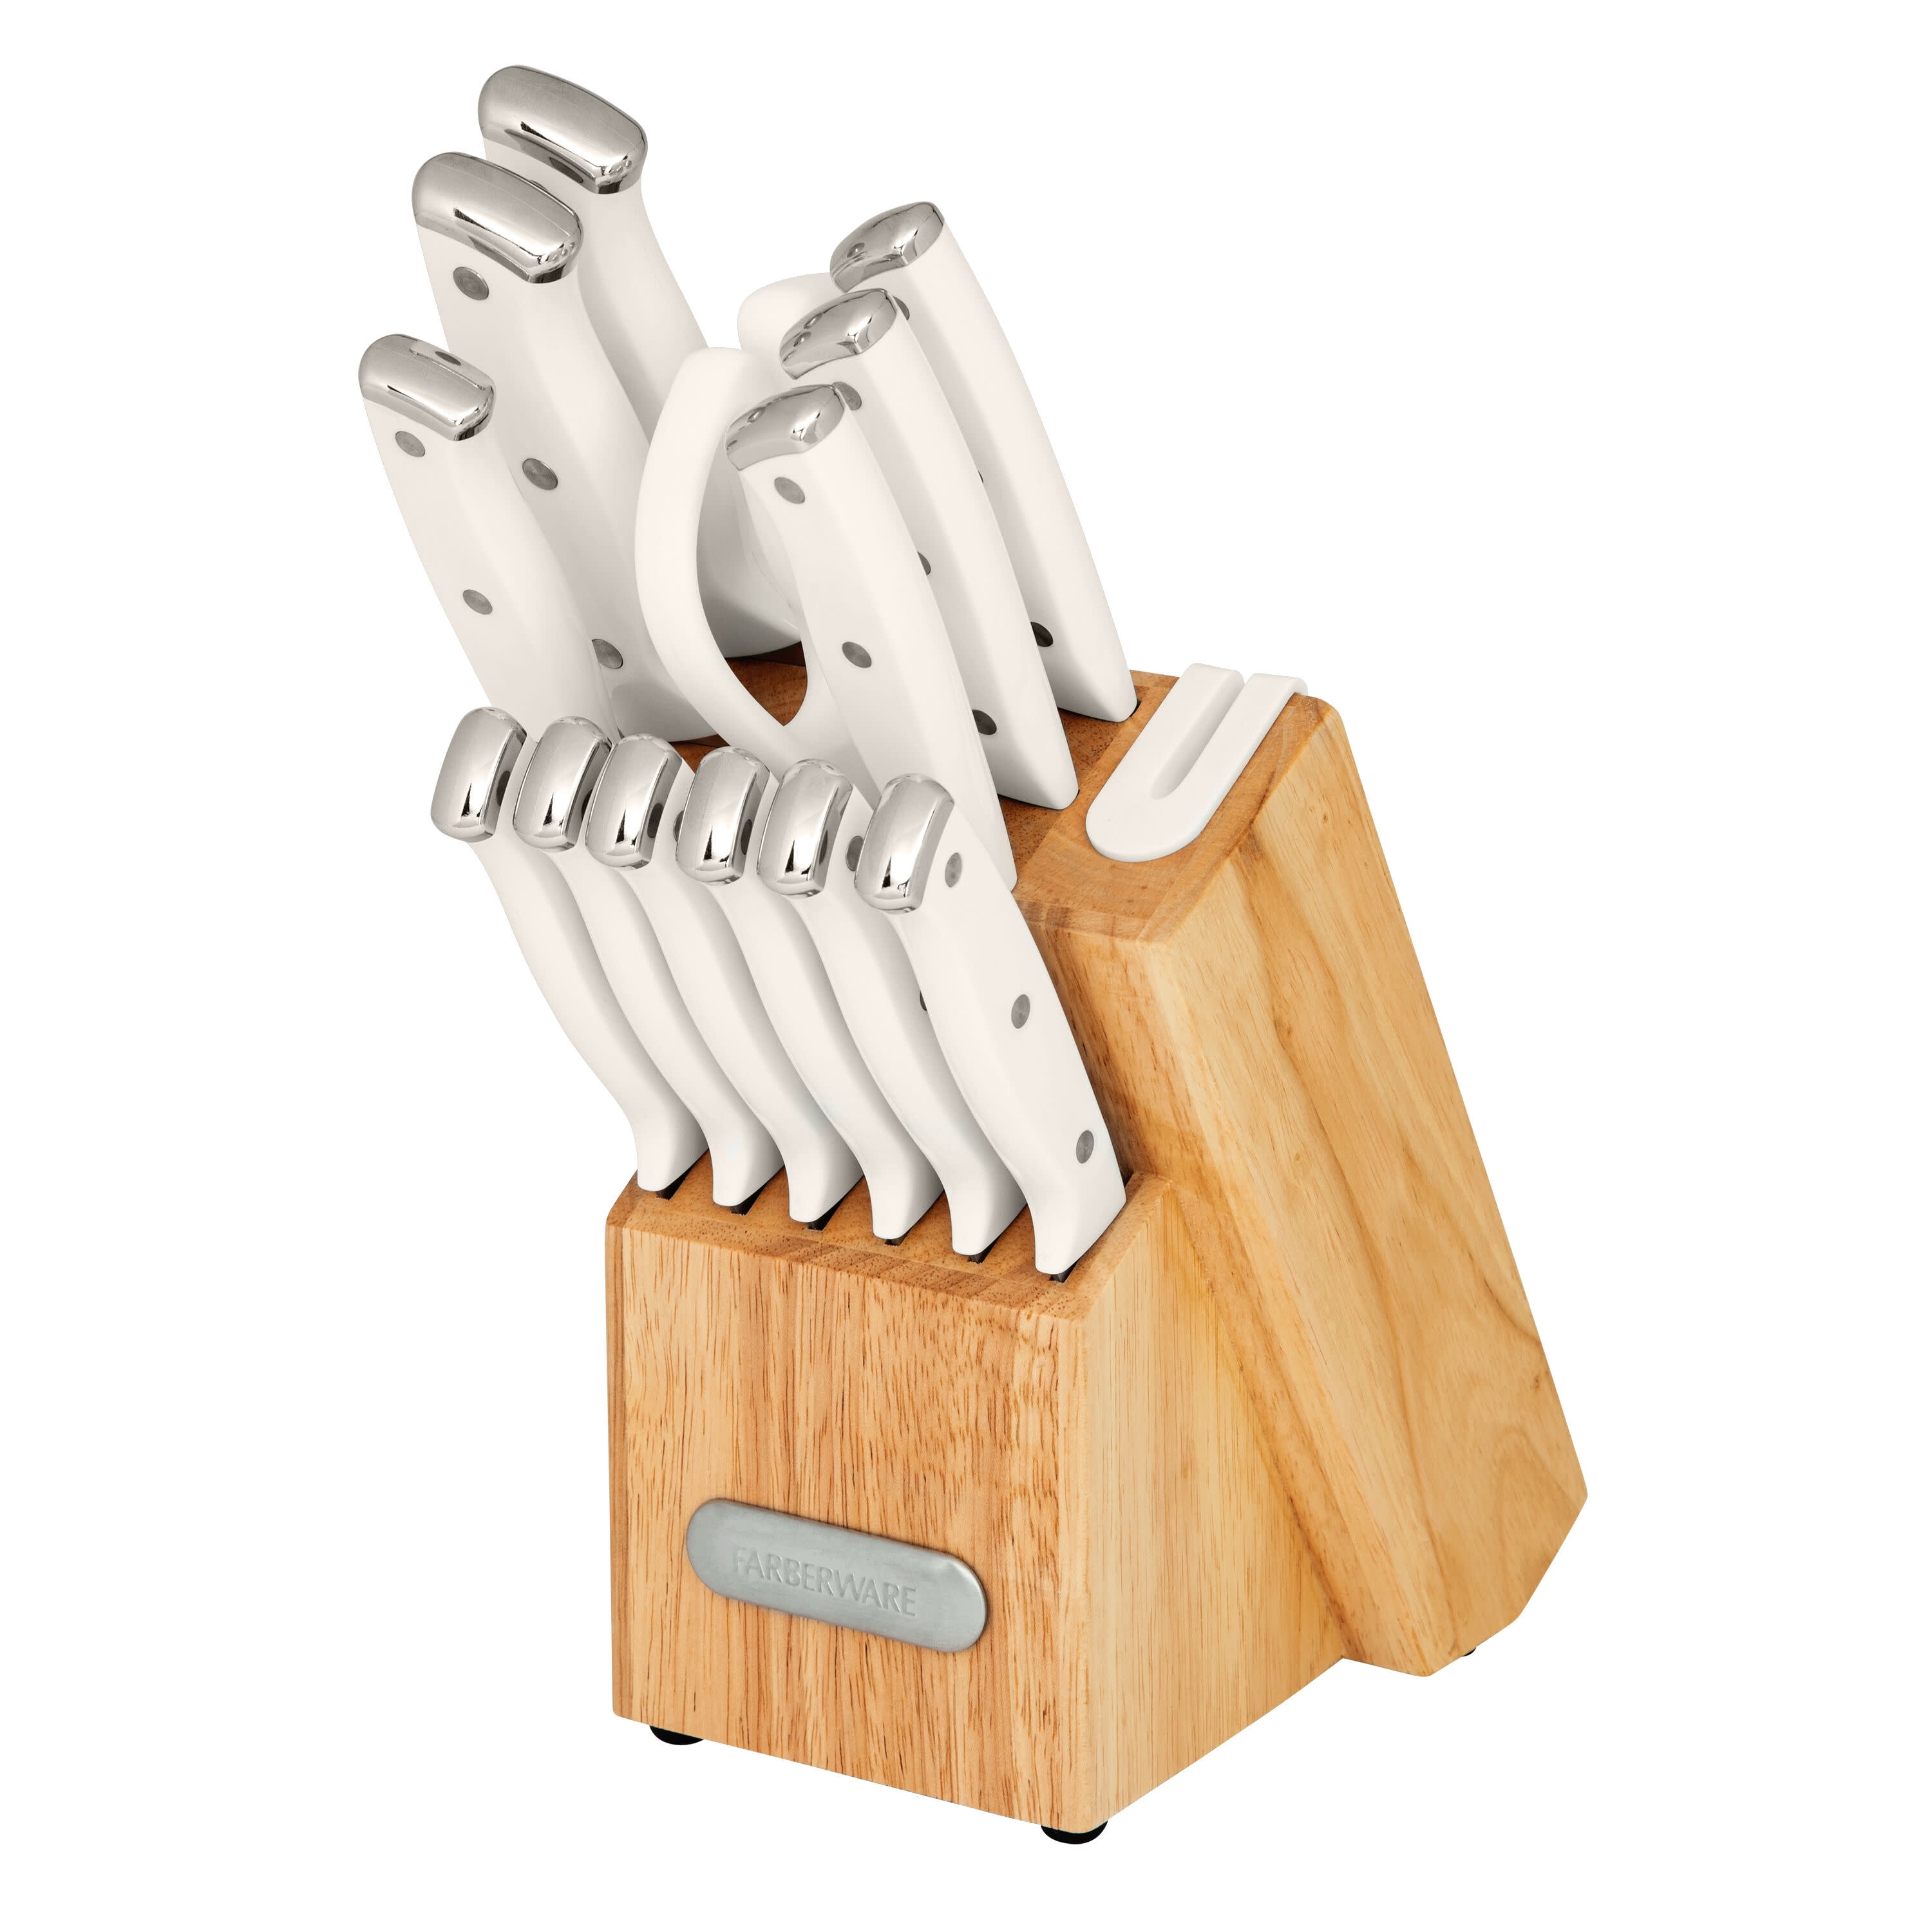 Farberware 15 Piece Delrin Cutlery Set with Built-in Edgekeeper